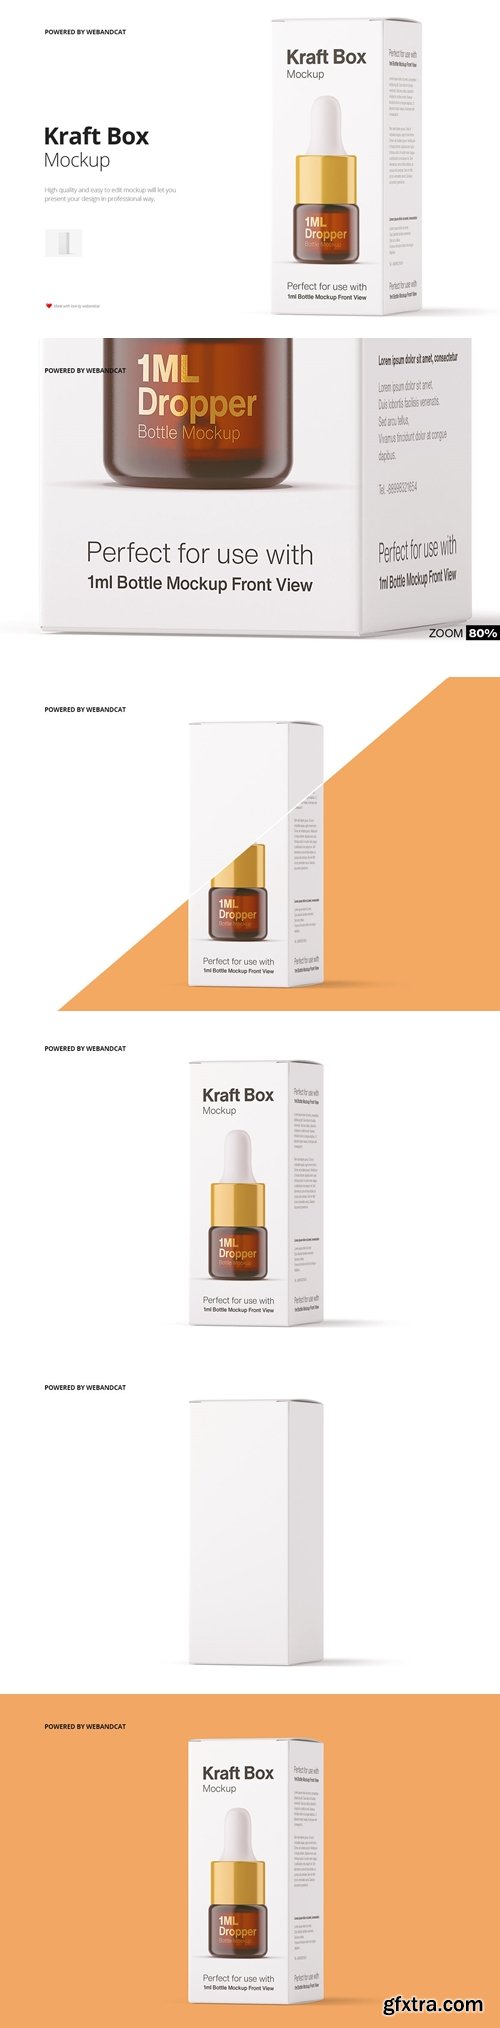 Kraft Paper Box Mockup for Dropper Bottle » GFxtra